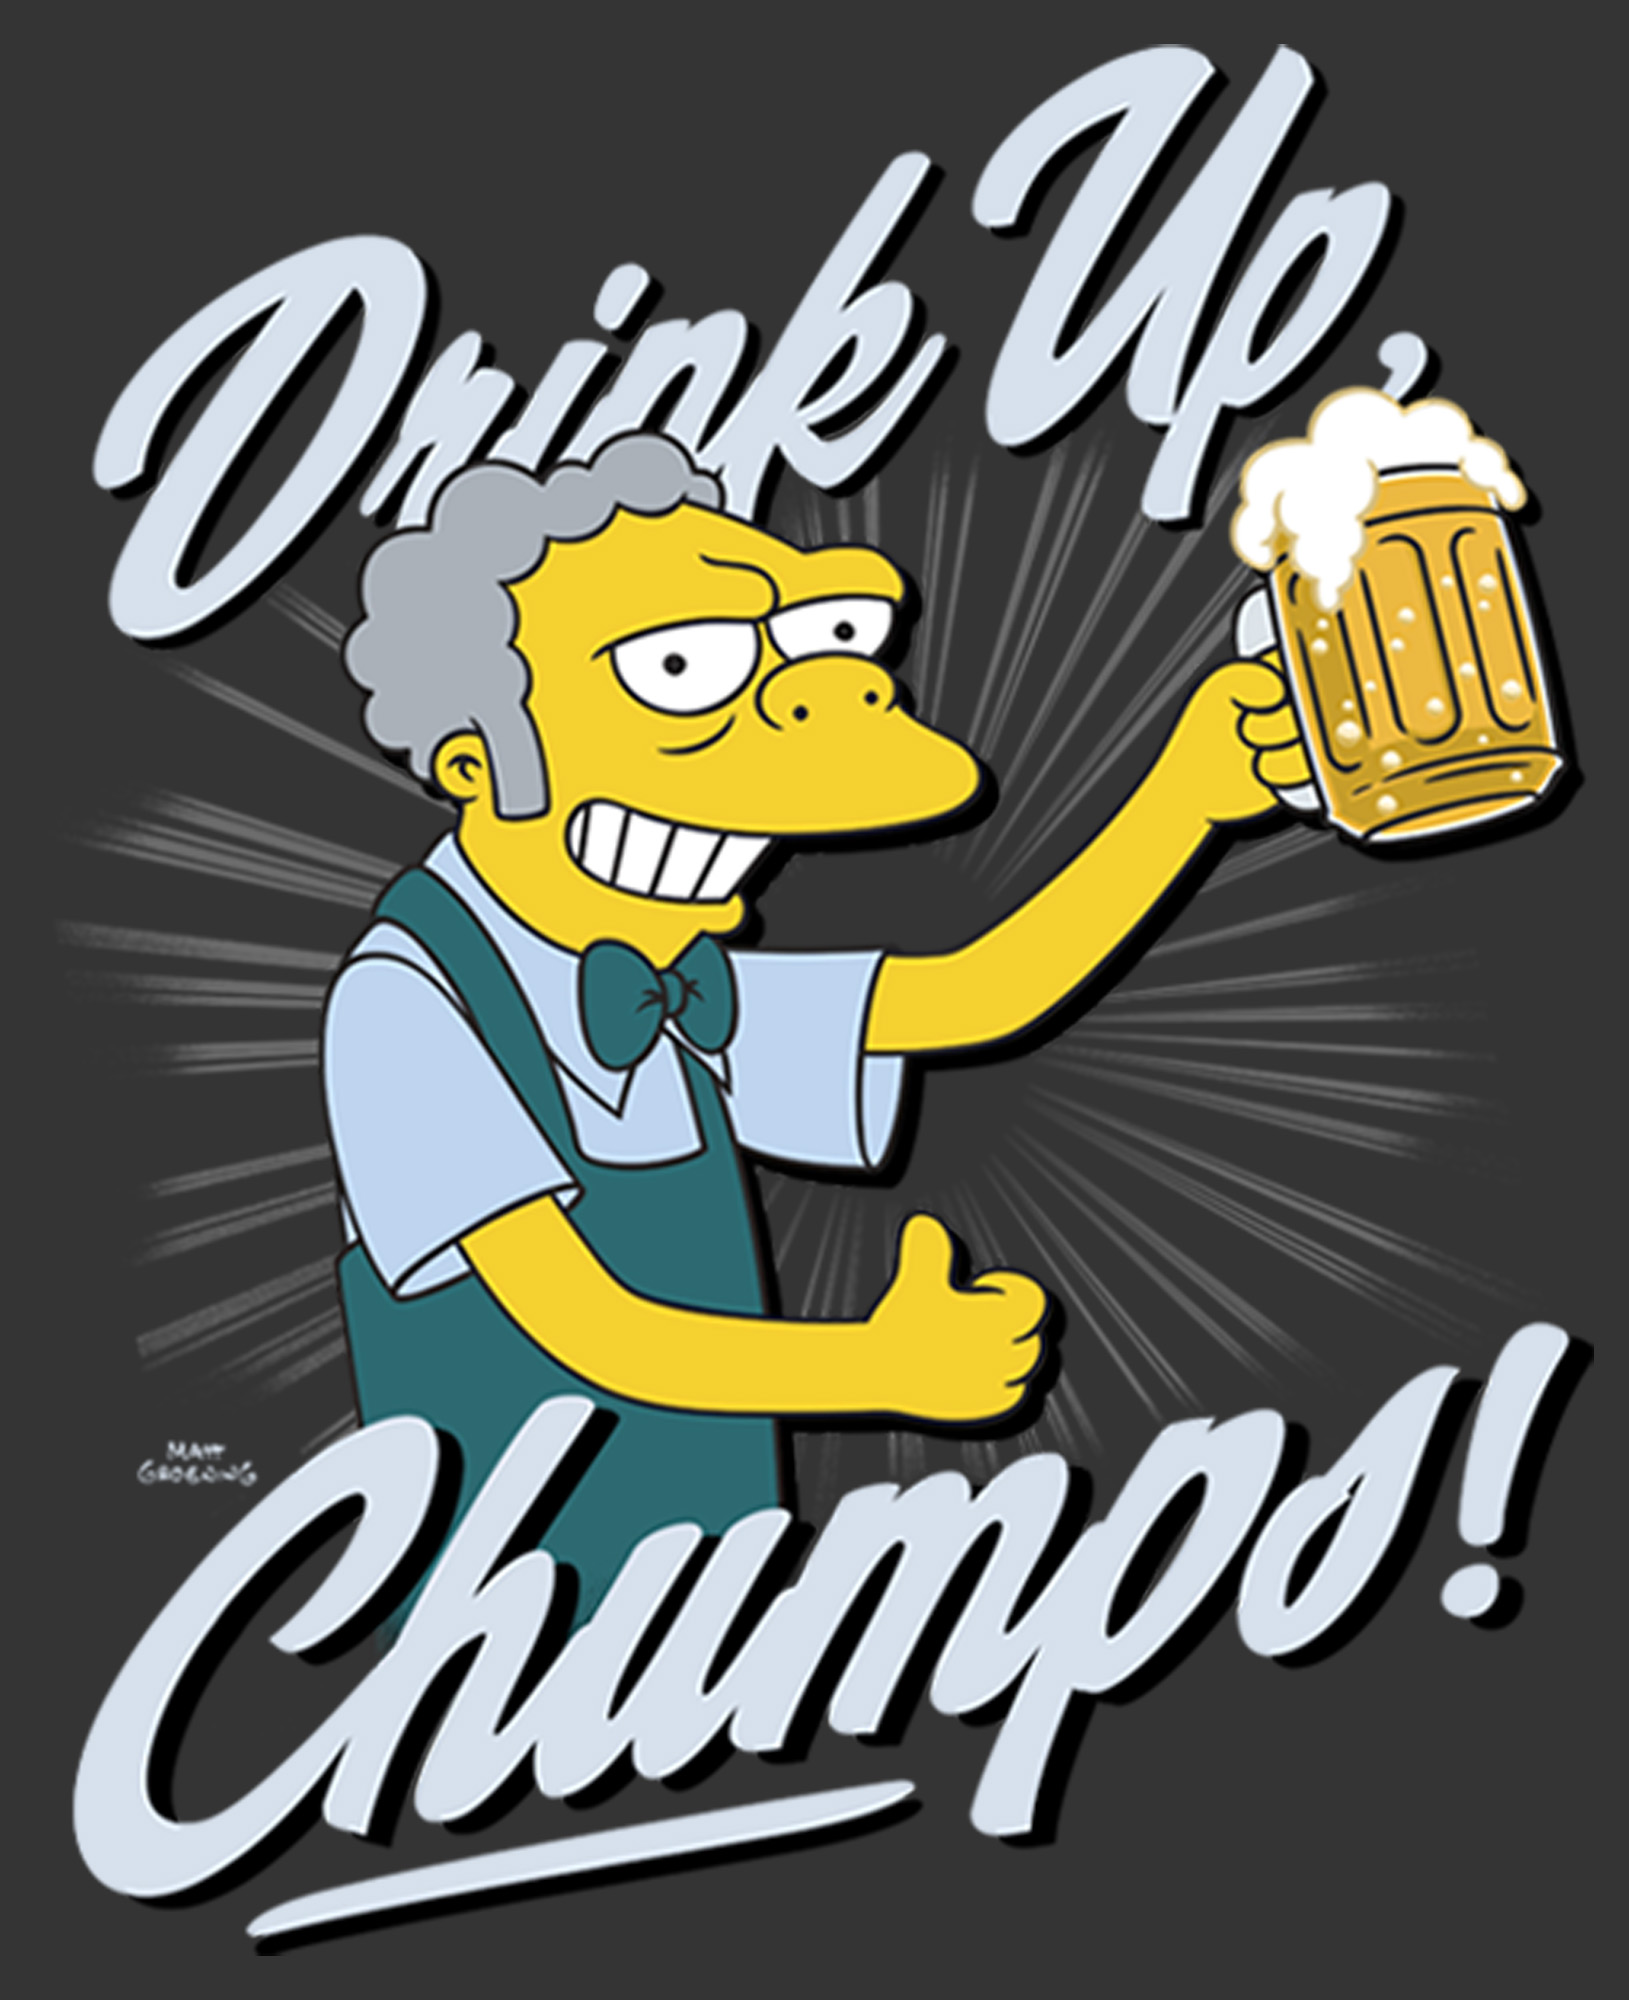 Men's The Simpsons Drink Up, Champs  Sweatshirt Charcoal Heather Medium - image 2 of 4